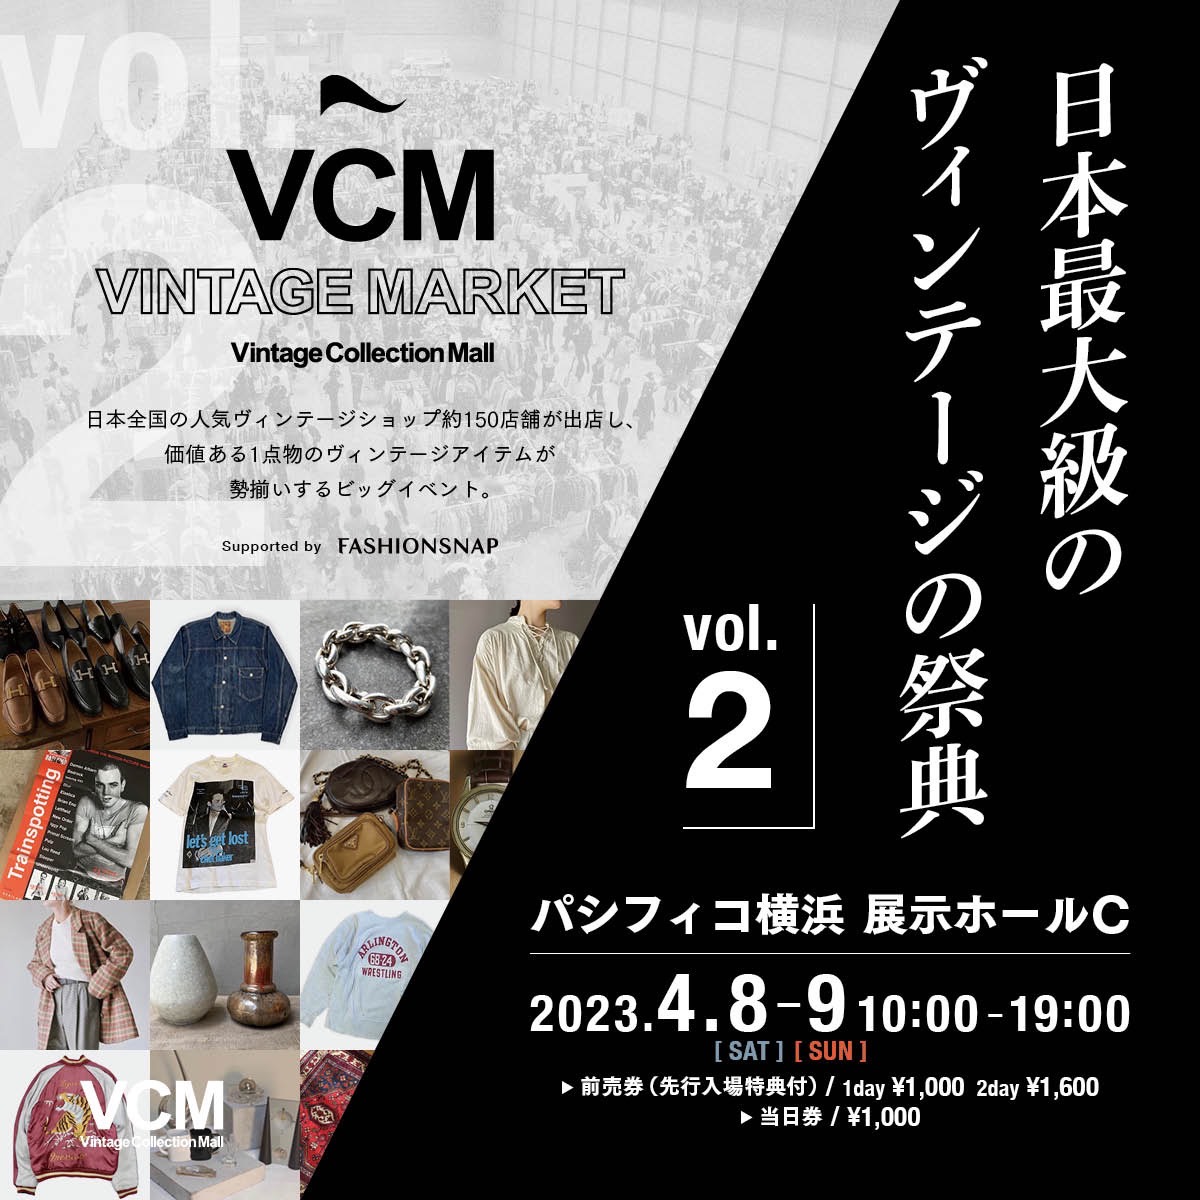 VCM VINTAGE MARKET Vol.2の宣伝ビジュアル